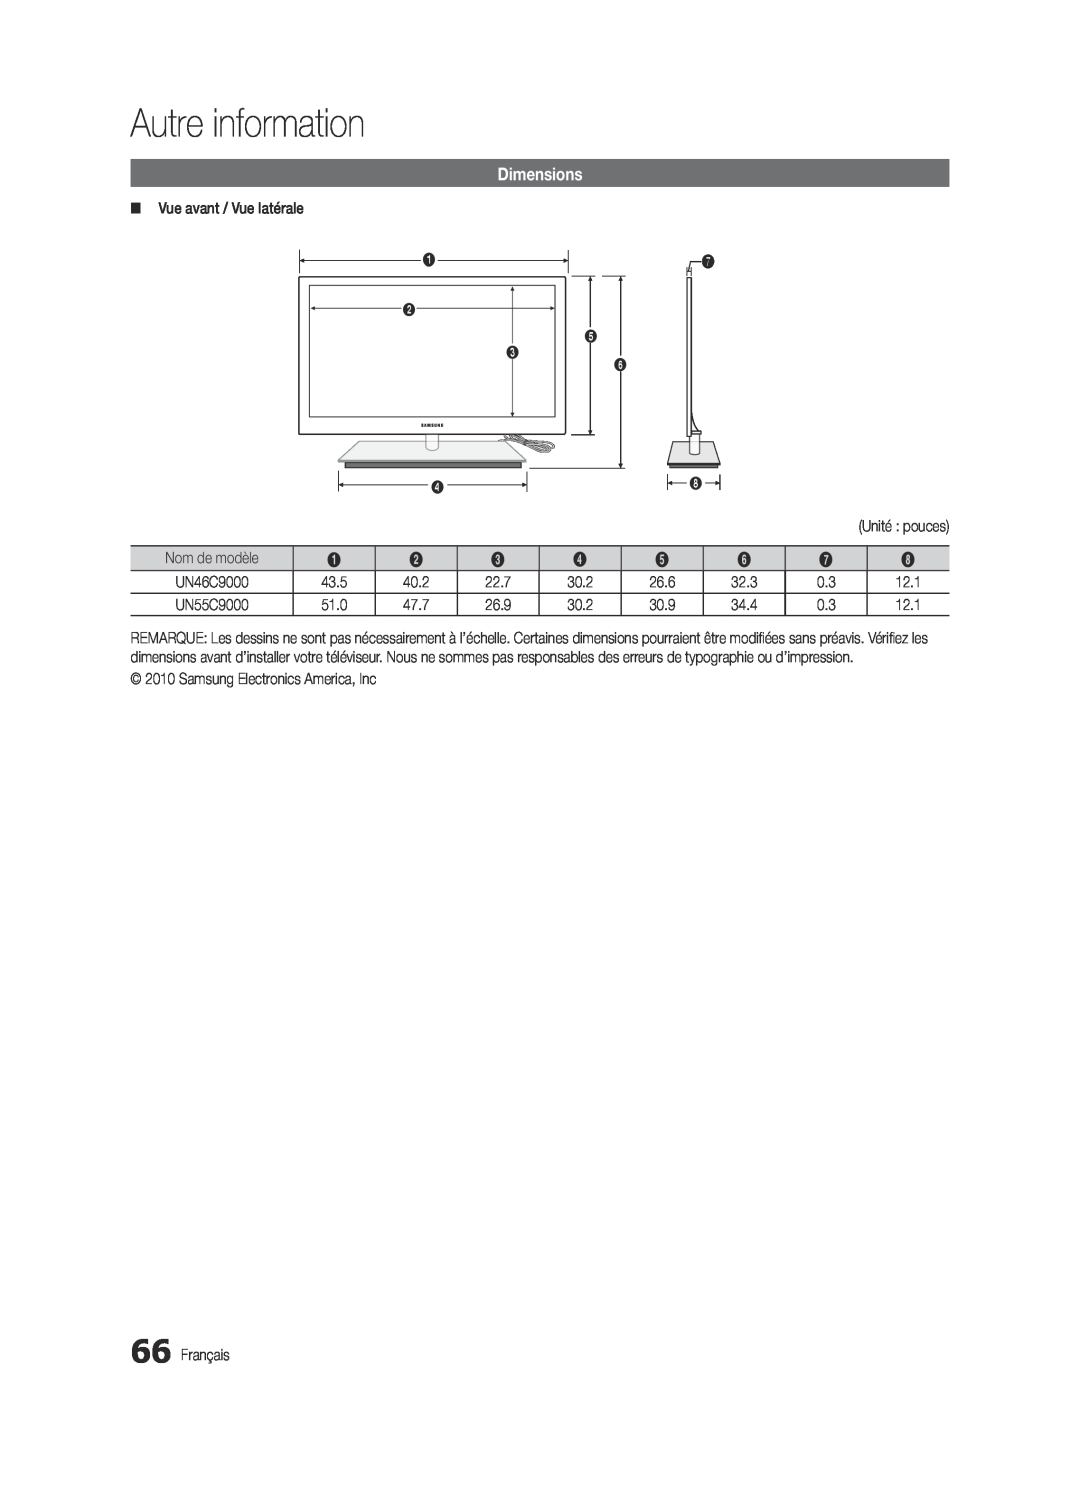 Samsung BN68-03088A-01, Series C9 user manual Autre information, Dimensions 